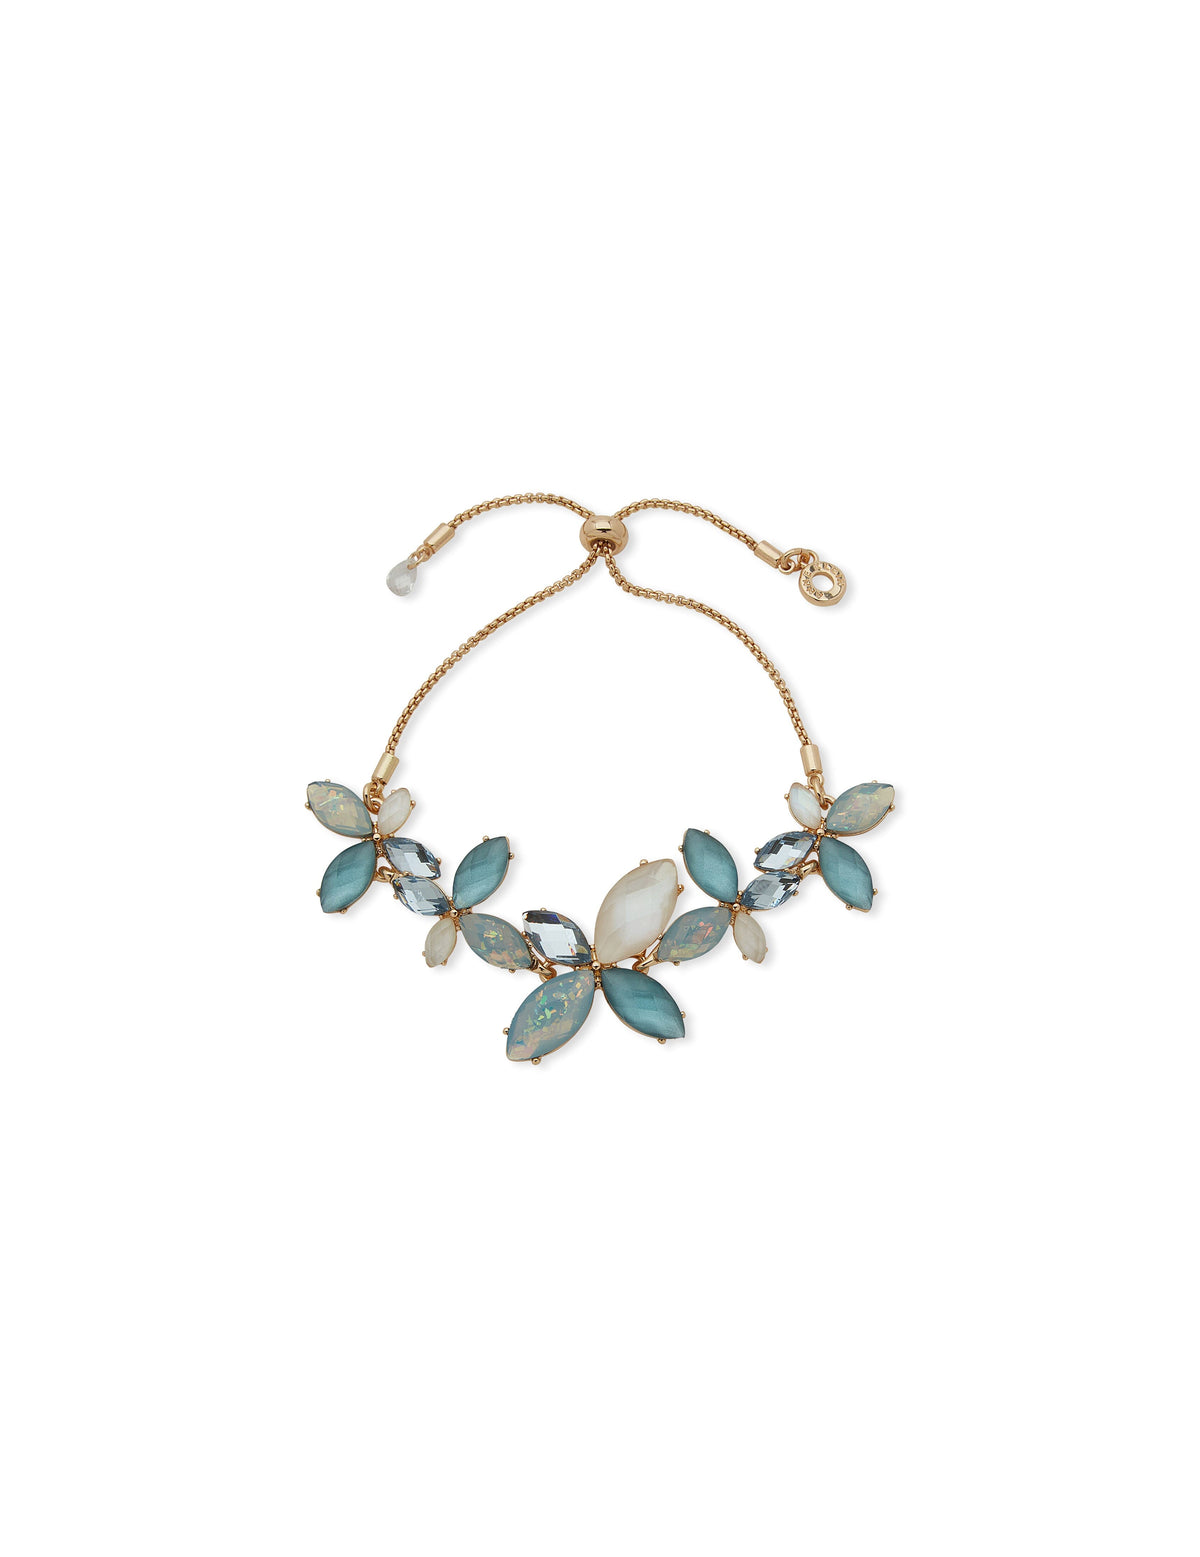 Anne Klein Gold Tone Crystal Stone Flower Slider Bracelet